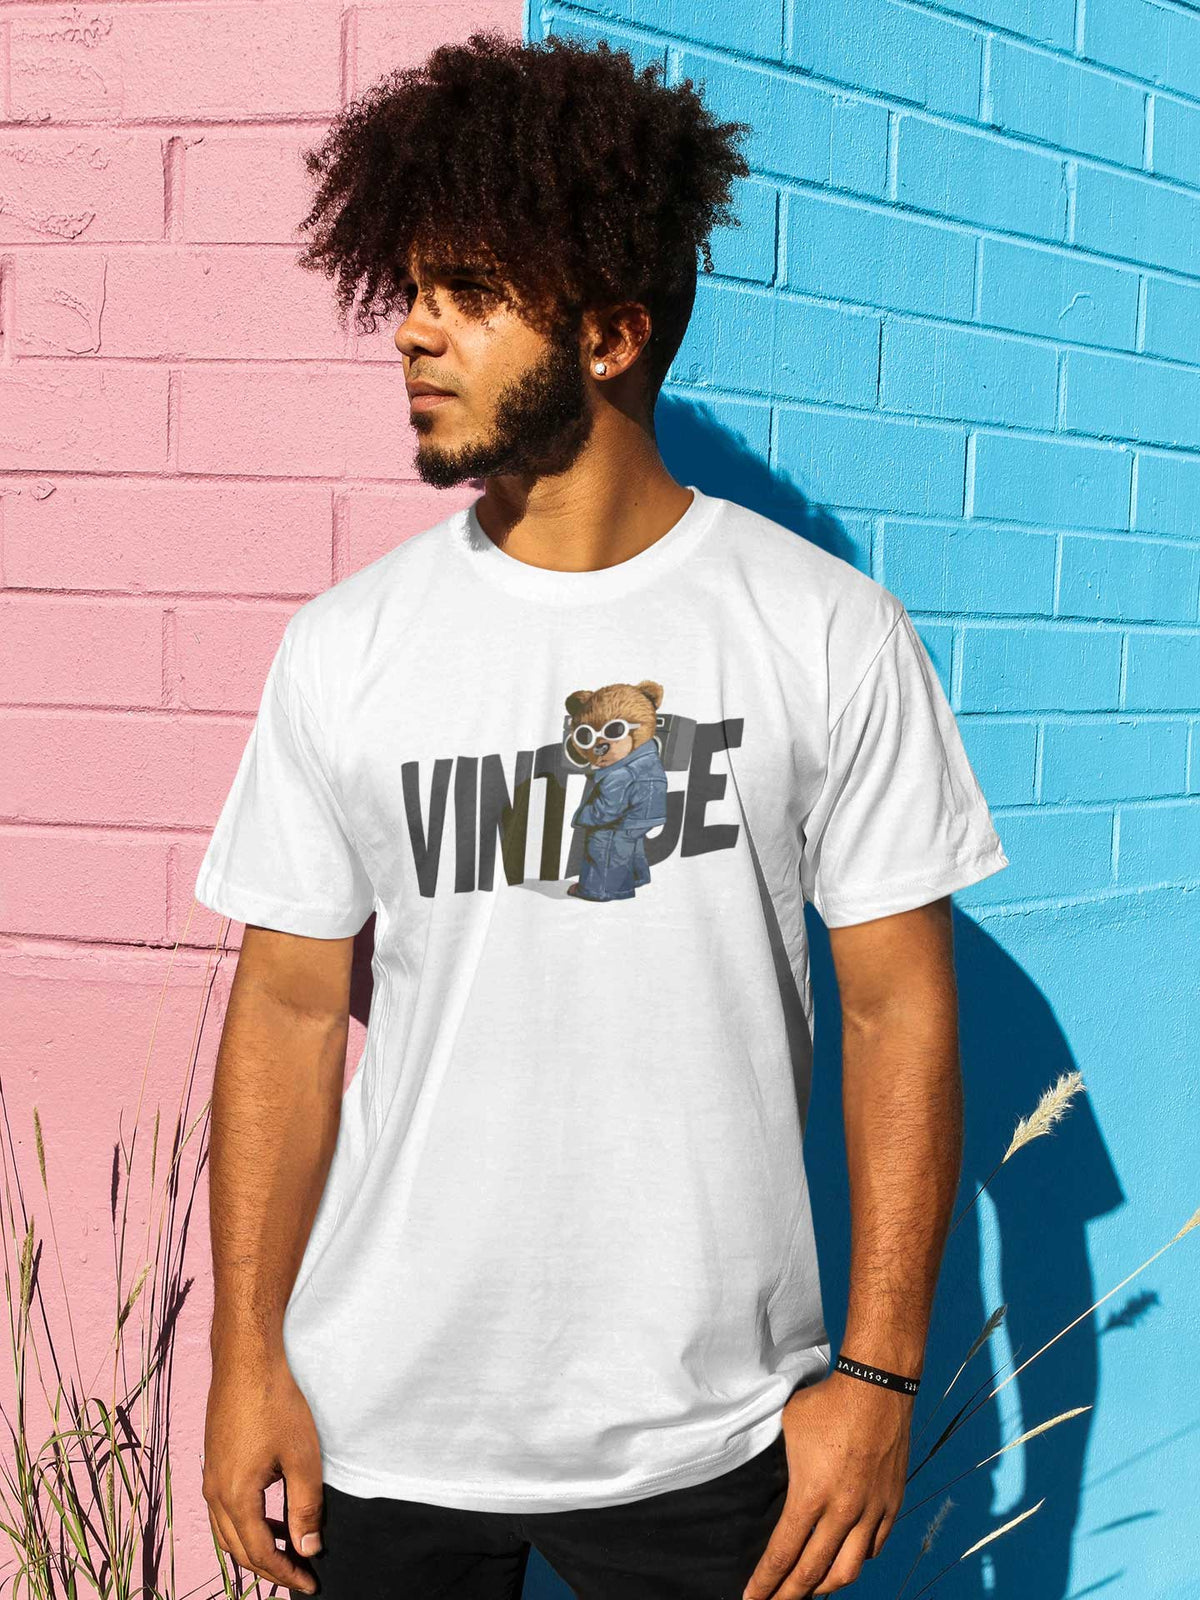 Men's White VINTAGE Printed T-shirt